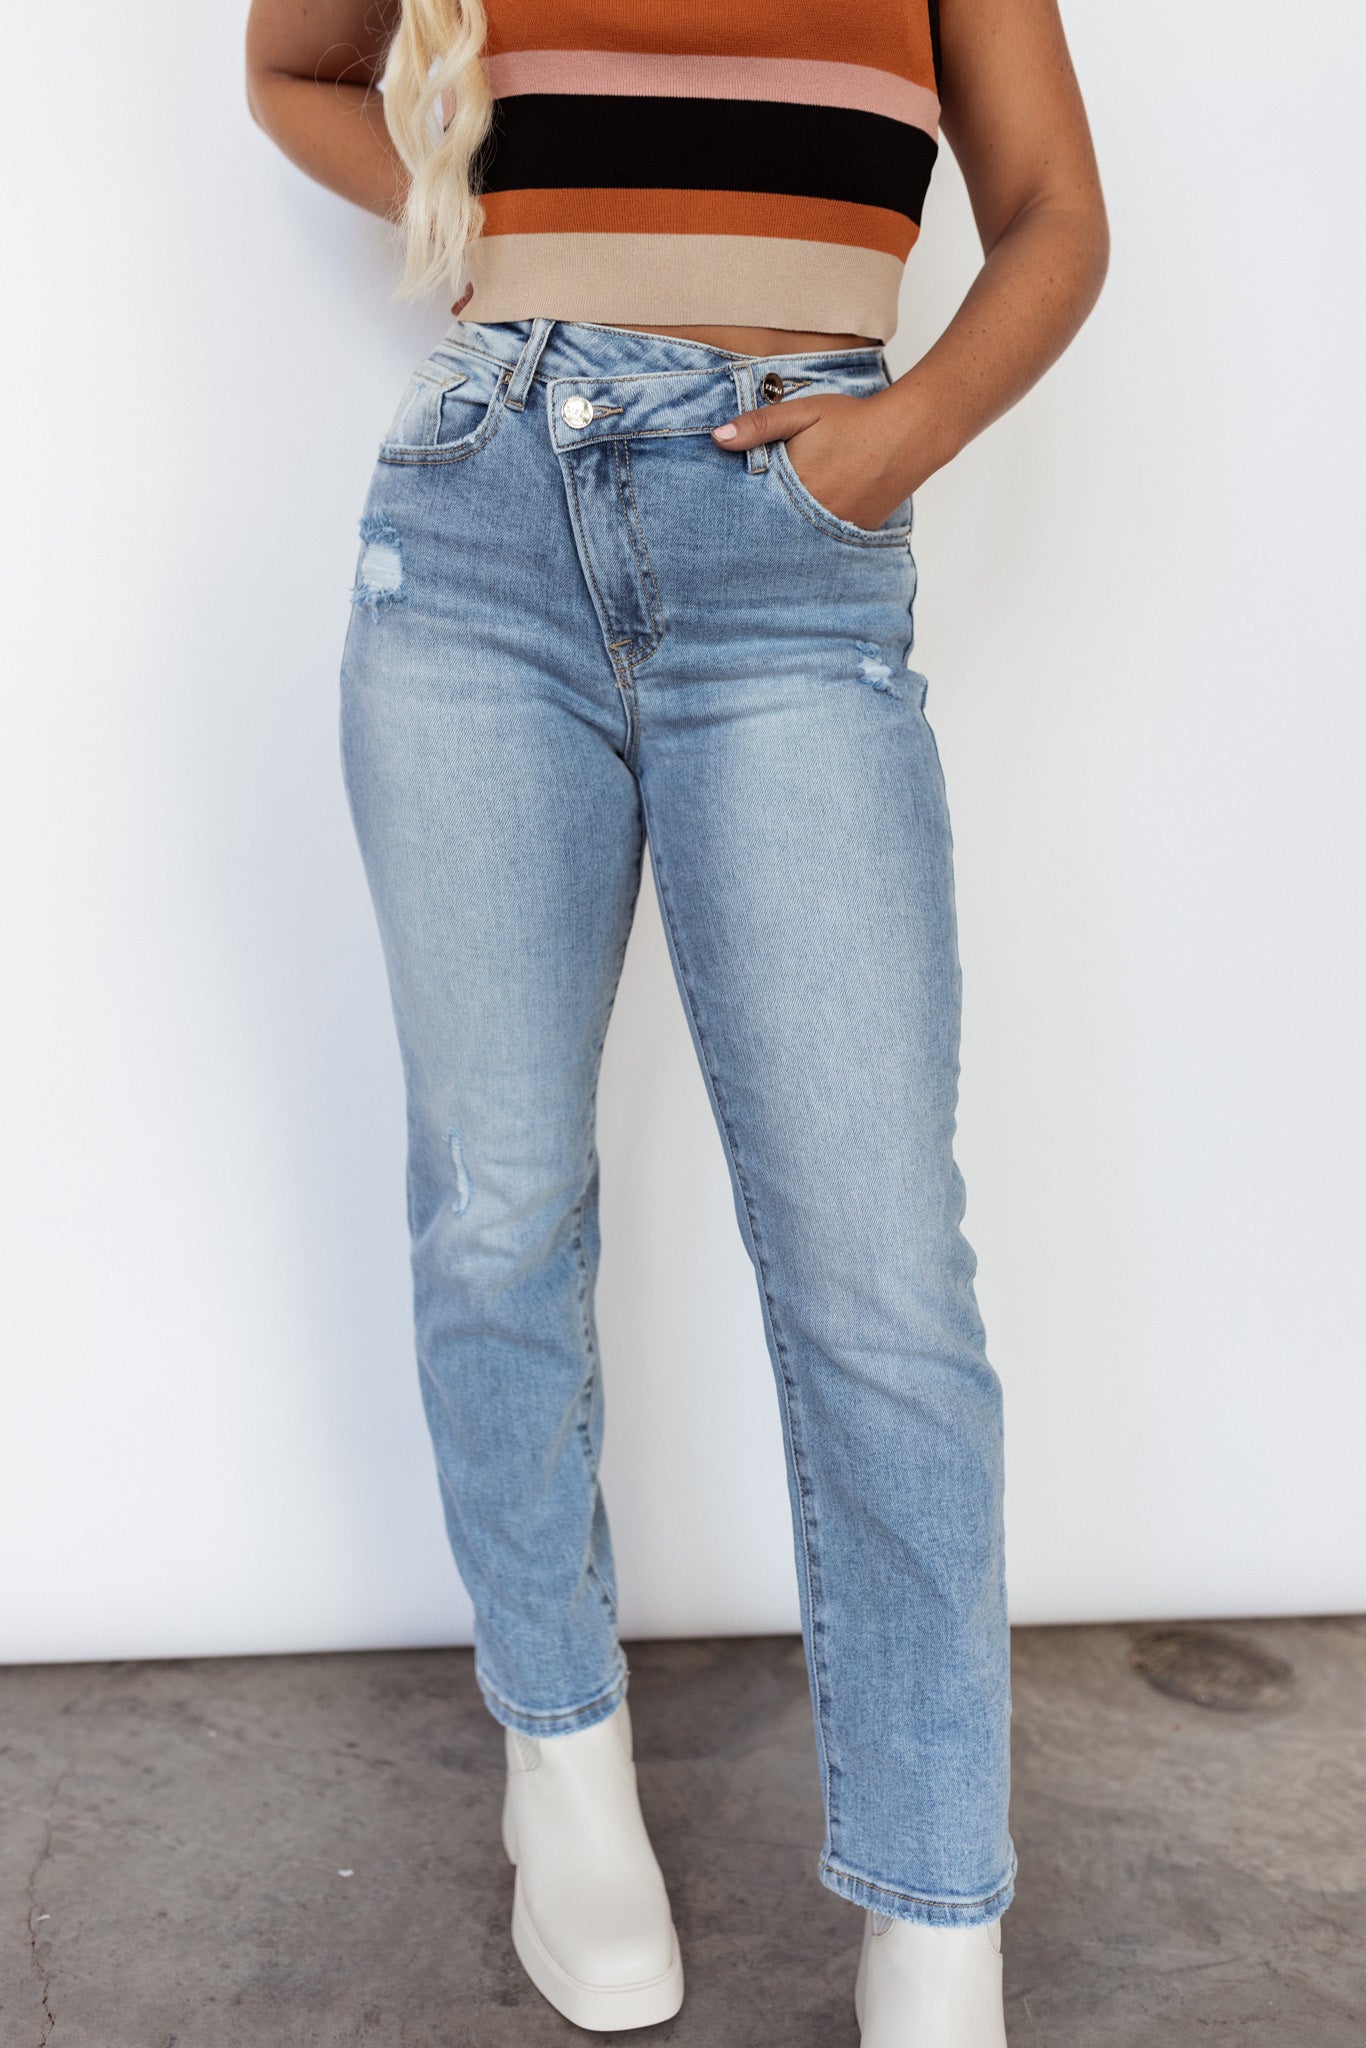 Talia Crossover Jeans FINAL SALE